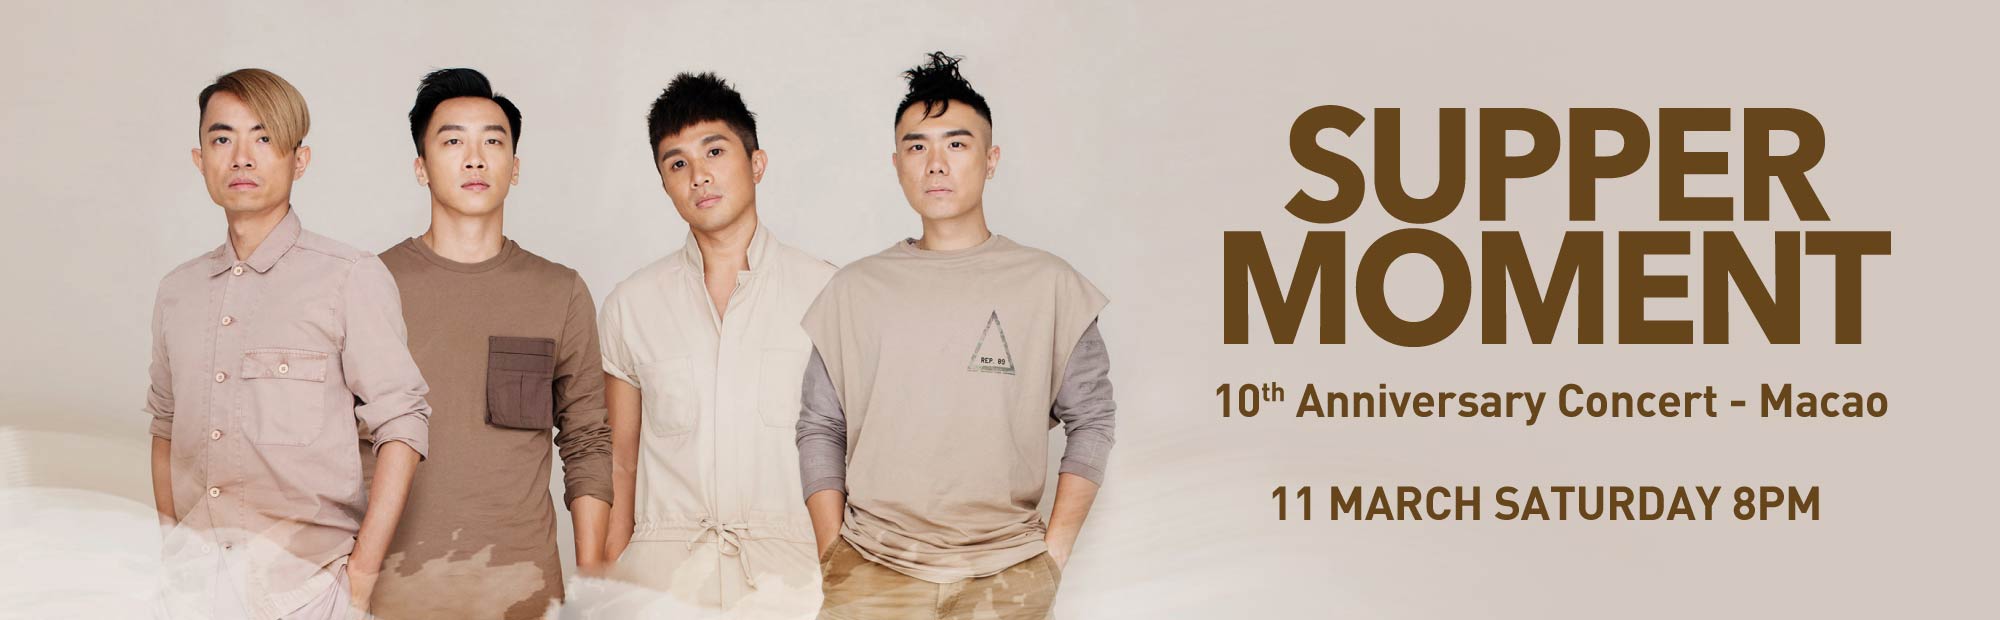 Supper Moment 10th Anniversary Concert – Macao rocks Cotai Arena 